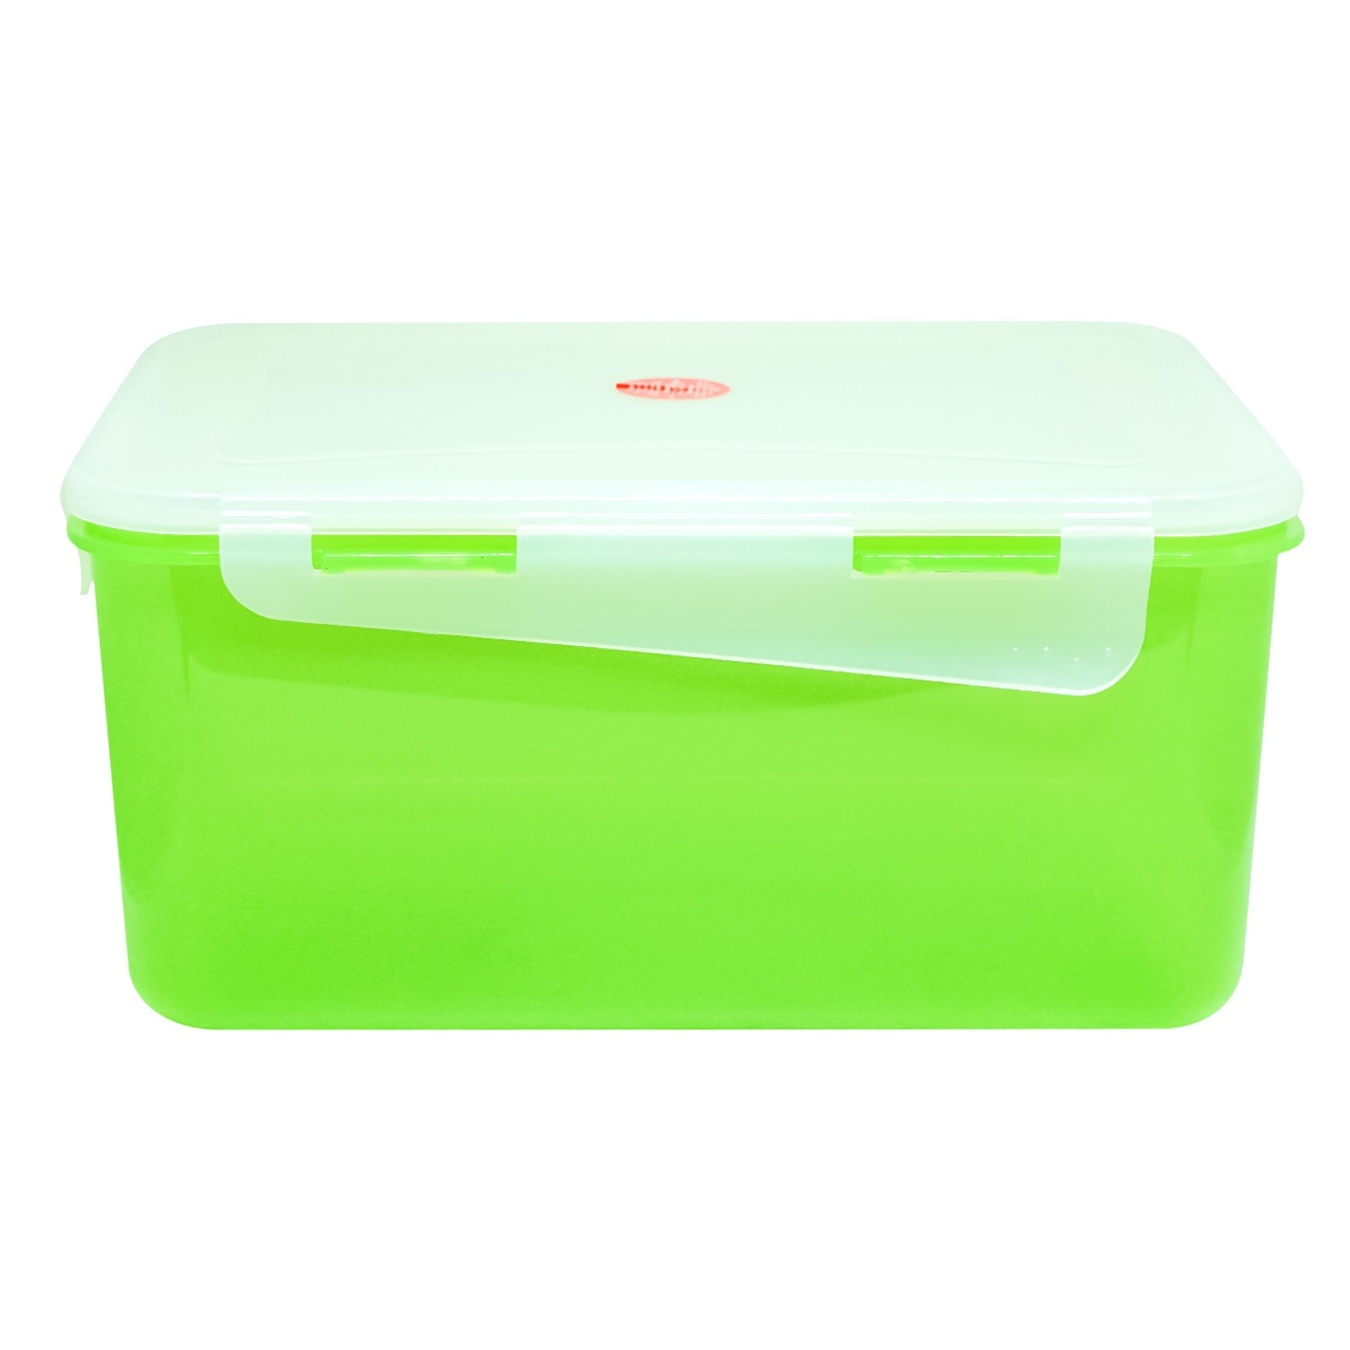 Universal container Fiesta Aleana rectangular green/transparent 4 l